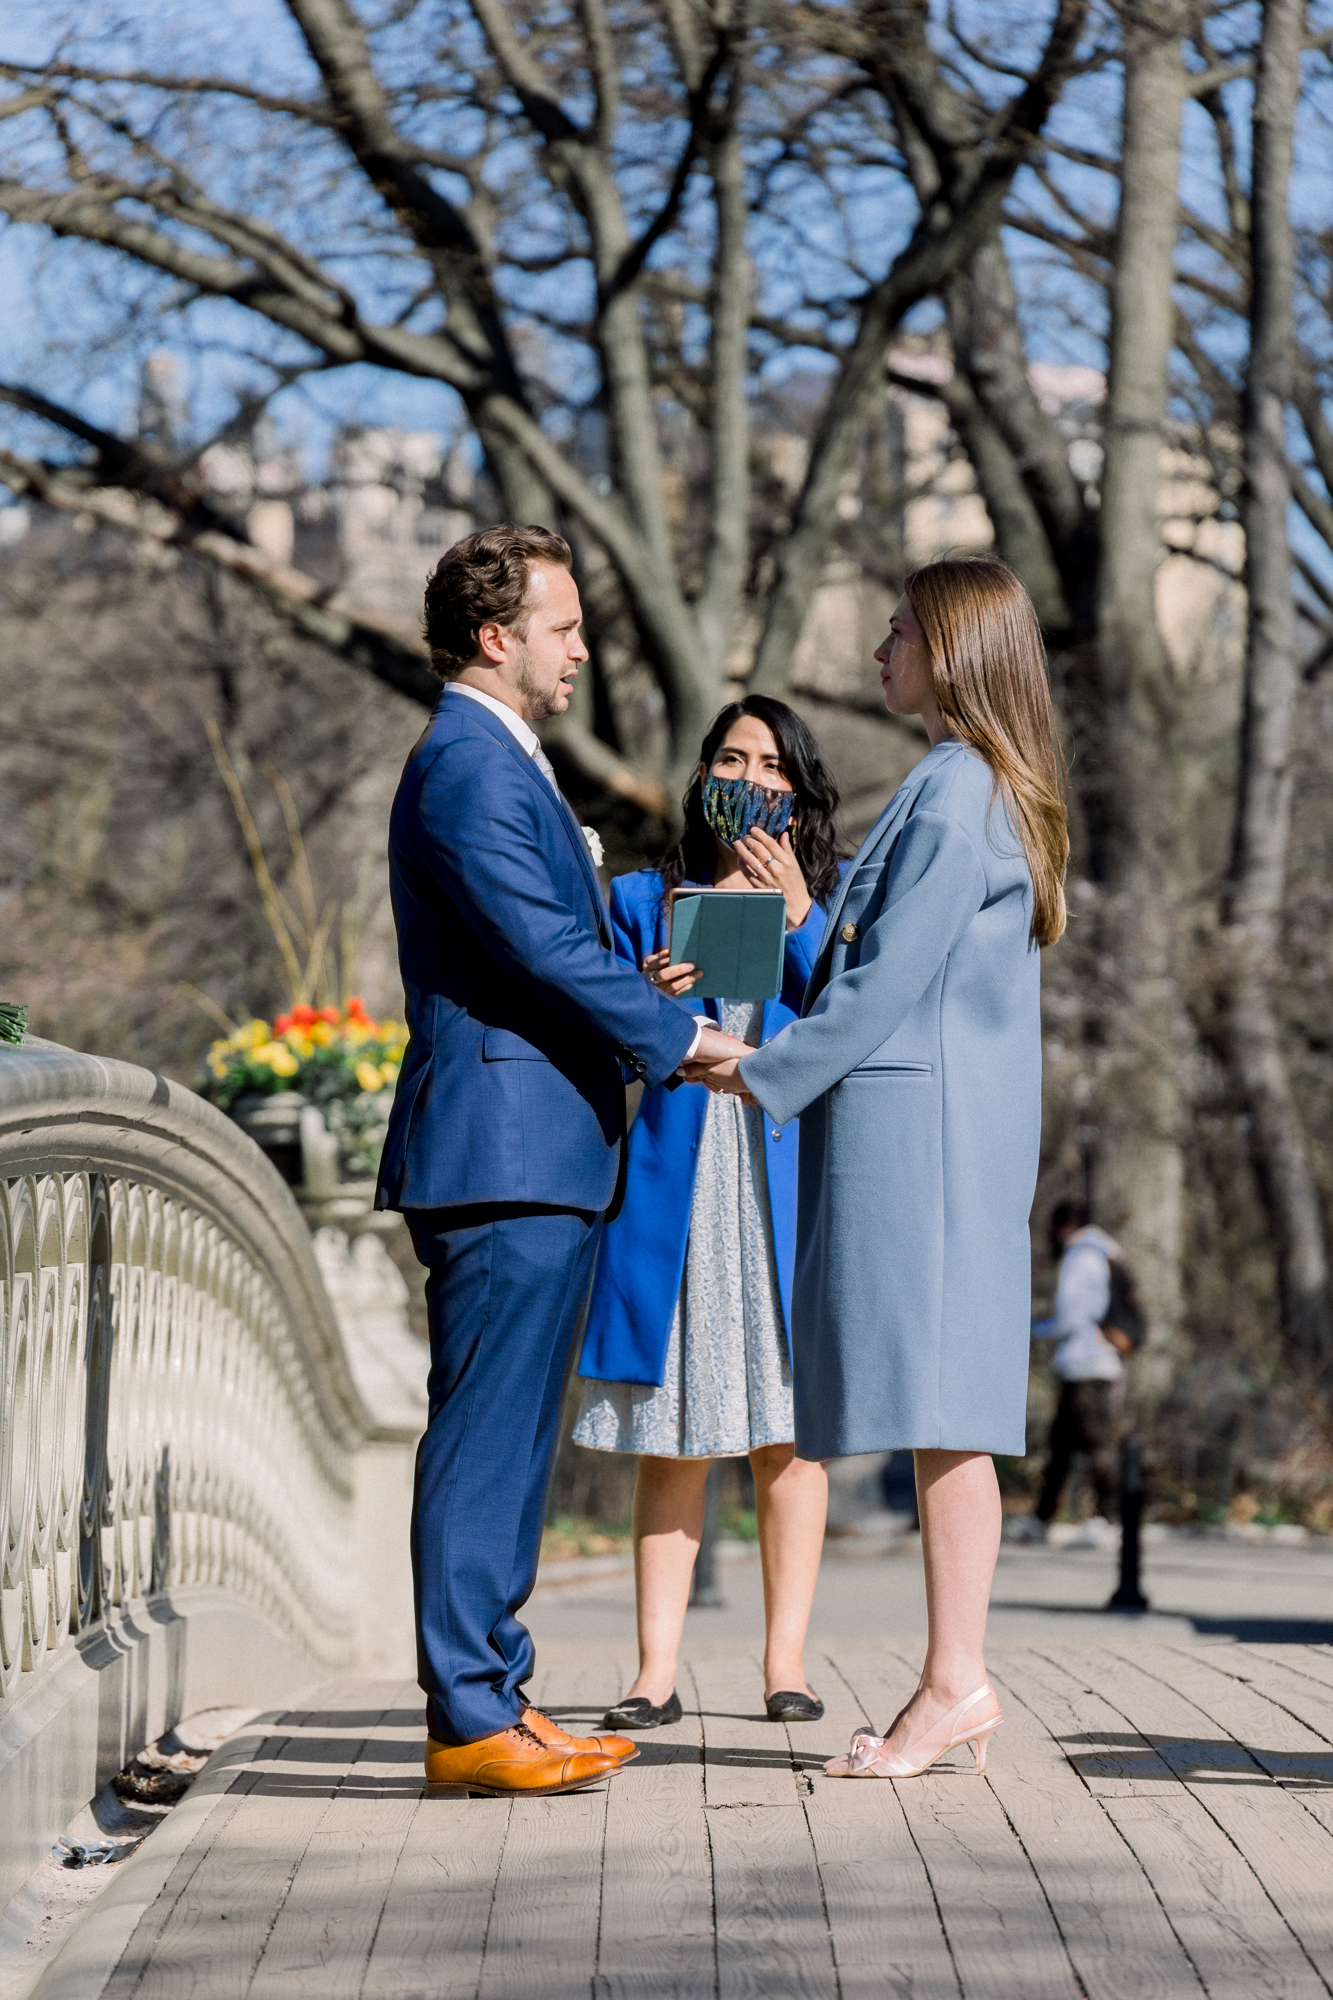 Stunning Bow Bridge Wedding Photos Among Central Park's Spring Cherry Blossoms